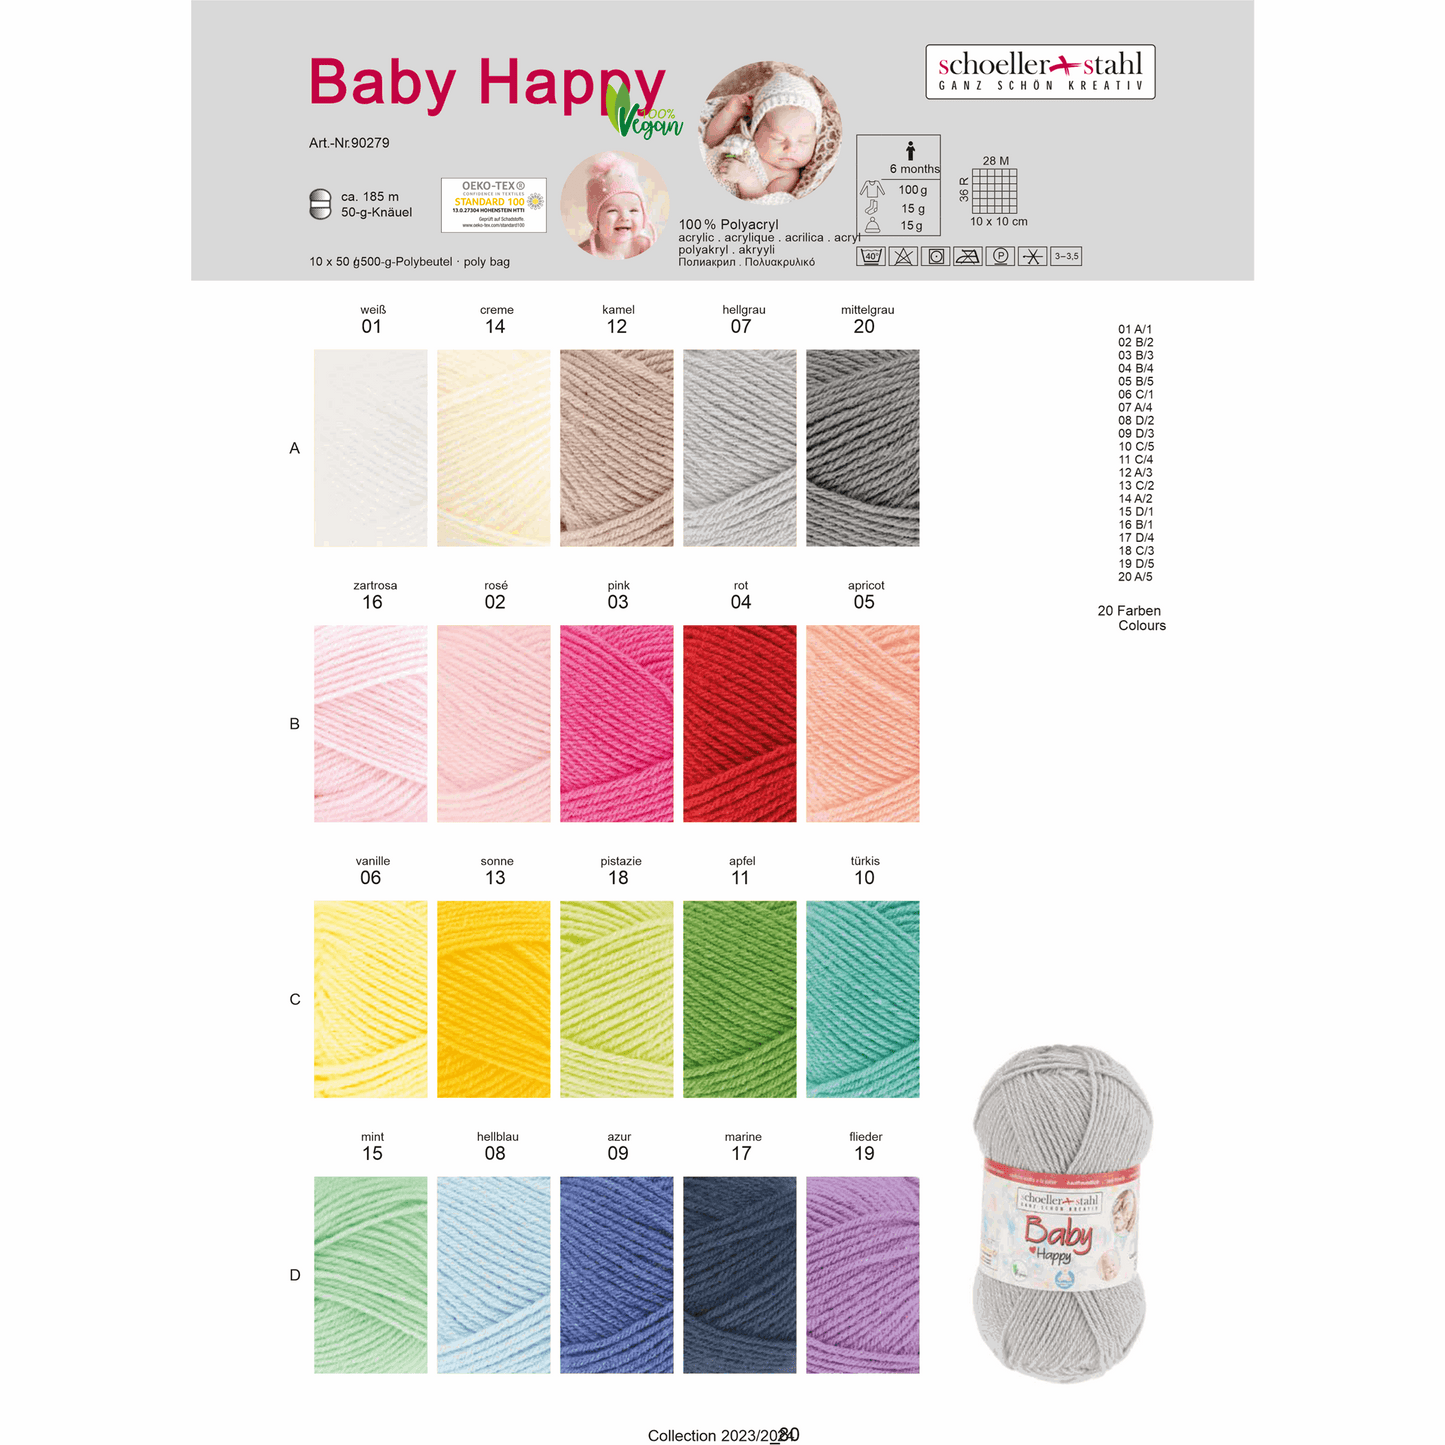 Baby happy 50g, 90279, color 3, pink